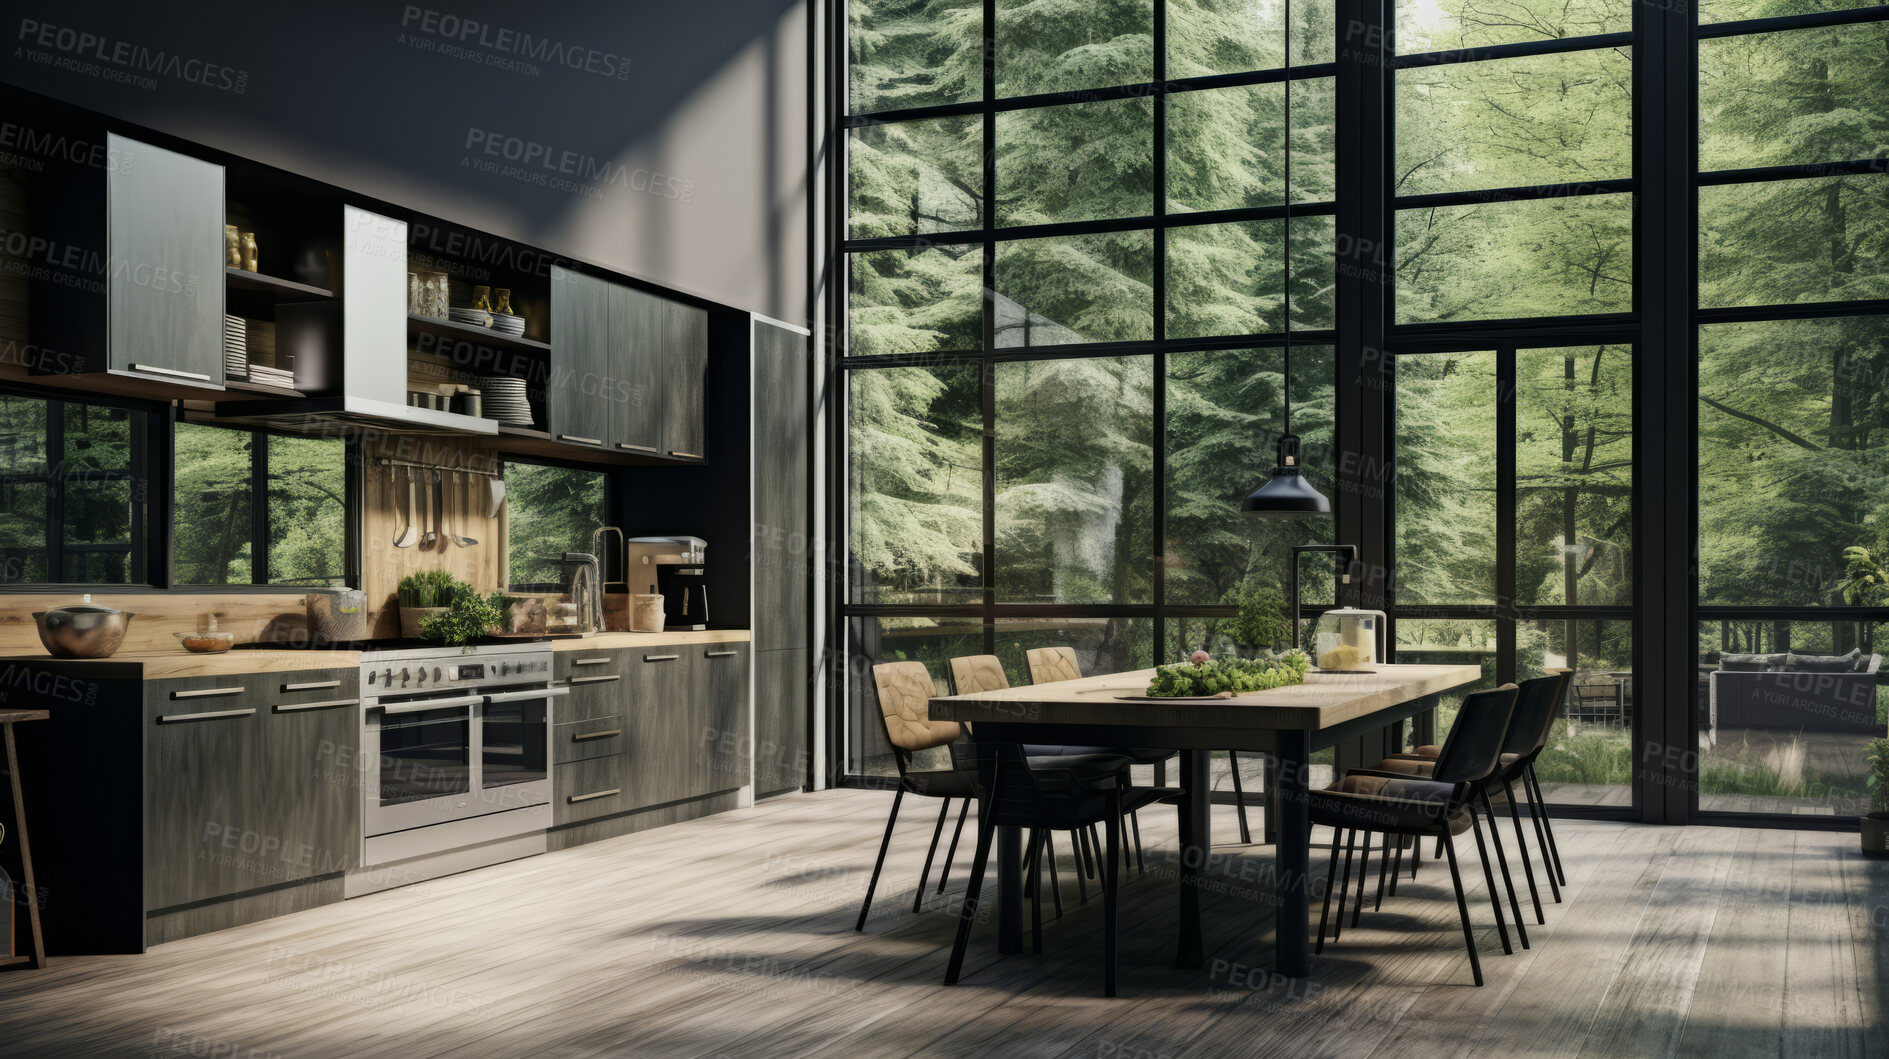 Buy stock photo Luxury kitchen interior design mockup. High windows and kitchen furniture render